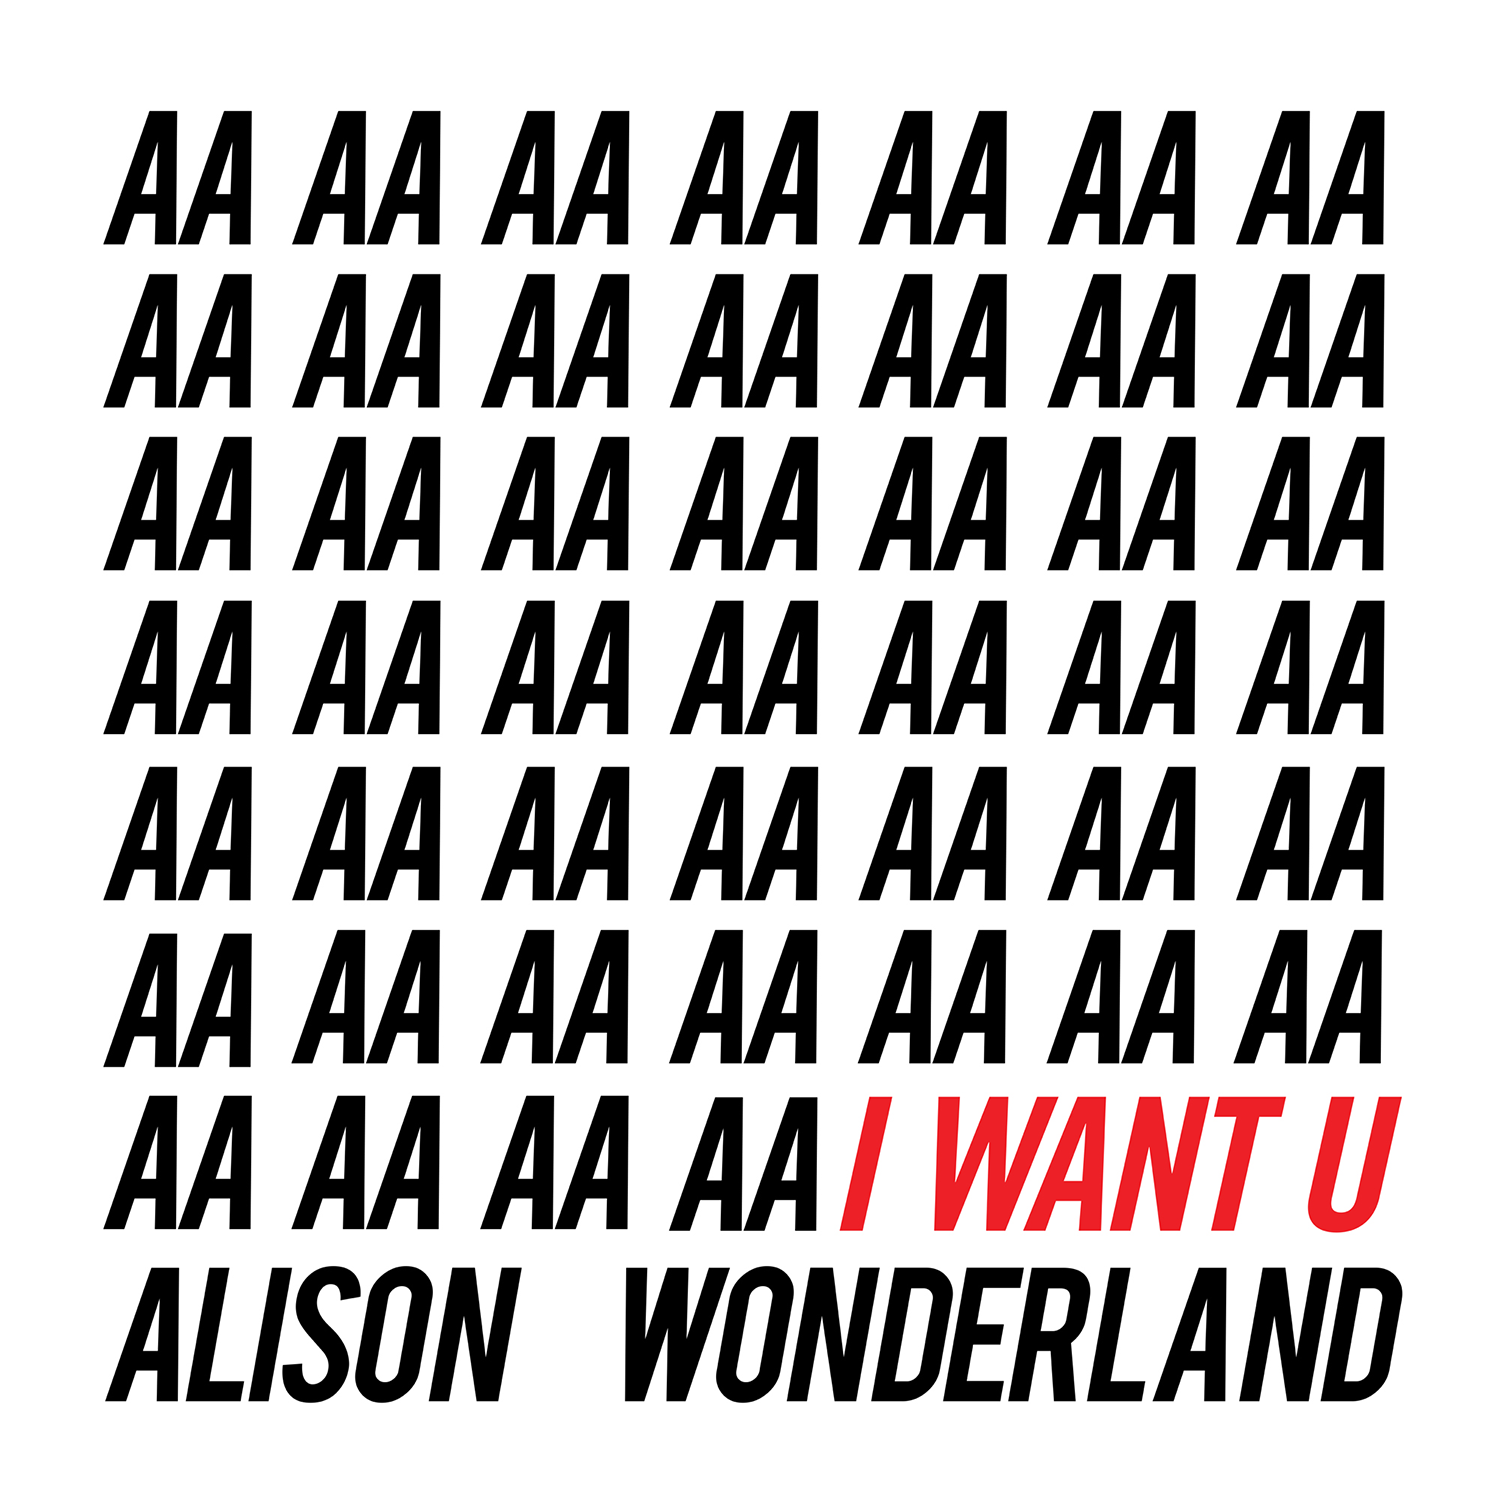 U want know. Alison Wonderland logo. I want u. Alison Wonderland u don't know. Alison Wonderland Loner.